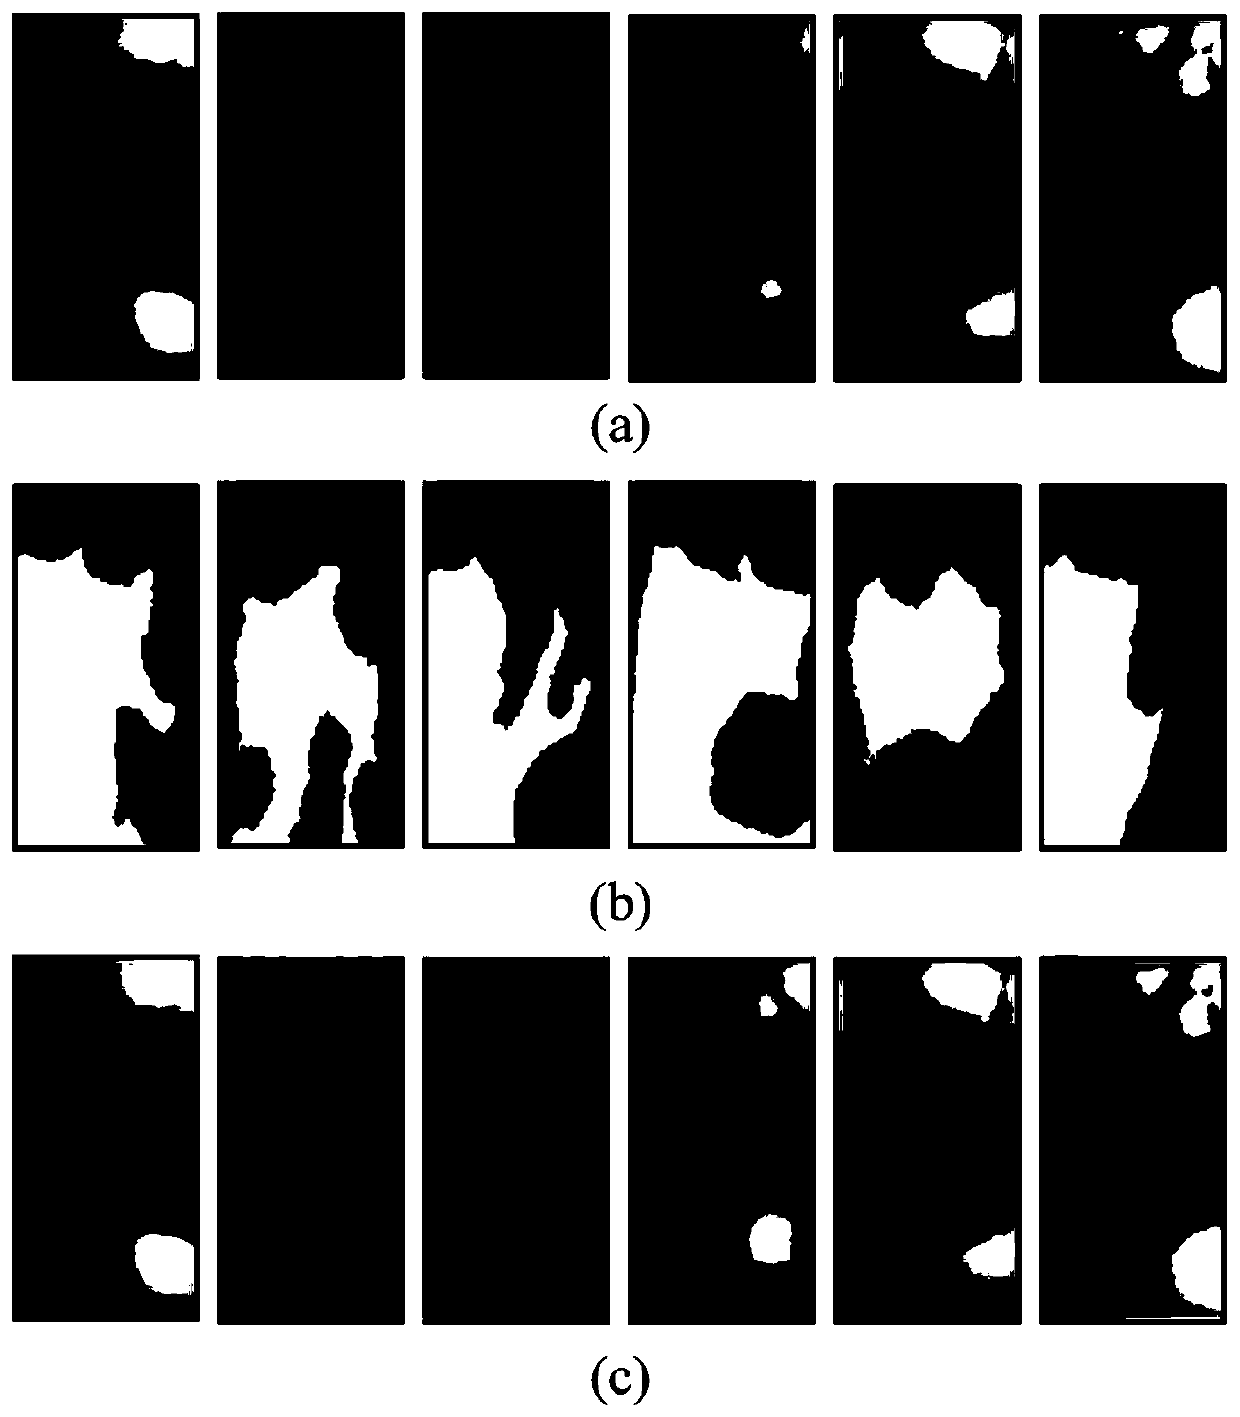 Finger vein image quick segmentation method based on active contour model